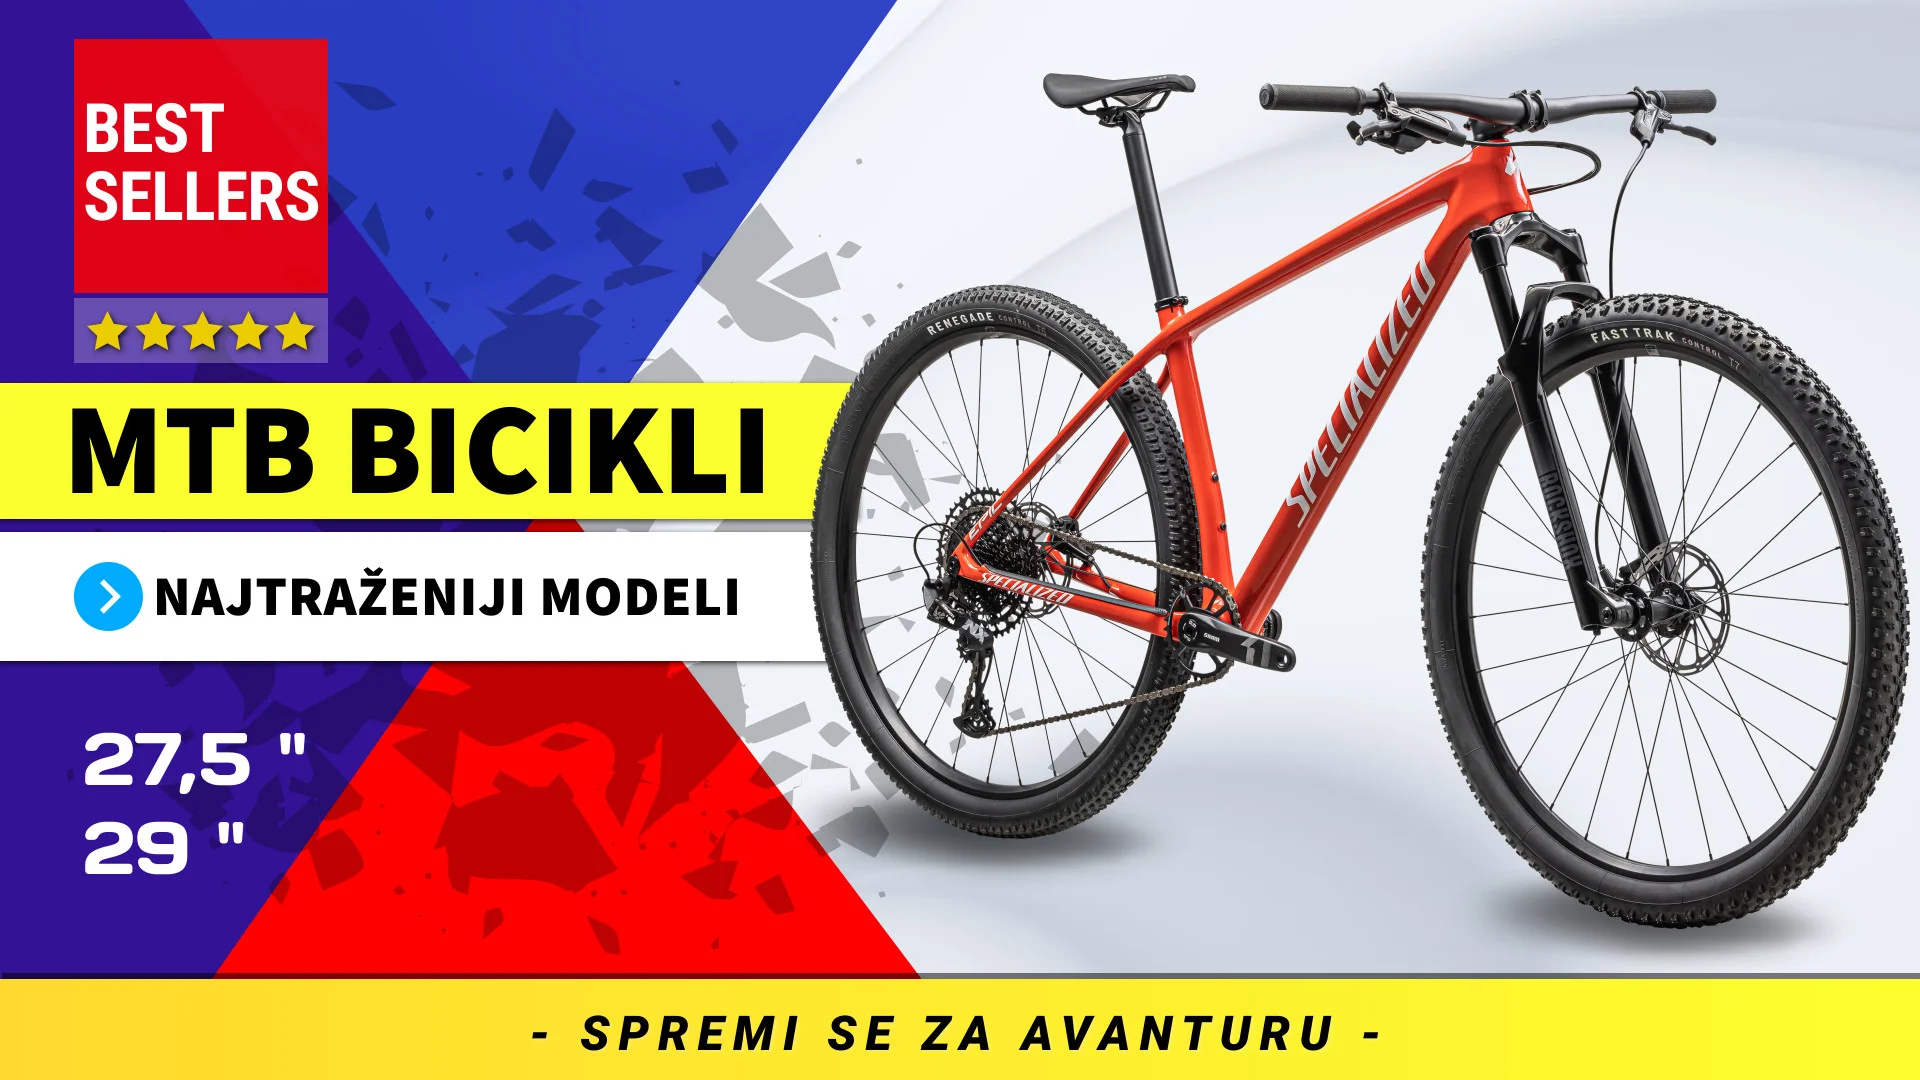 MTB bicikli-best seller modeli m-bike shop